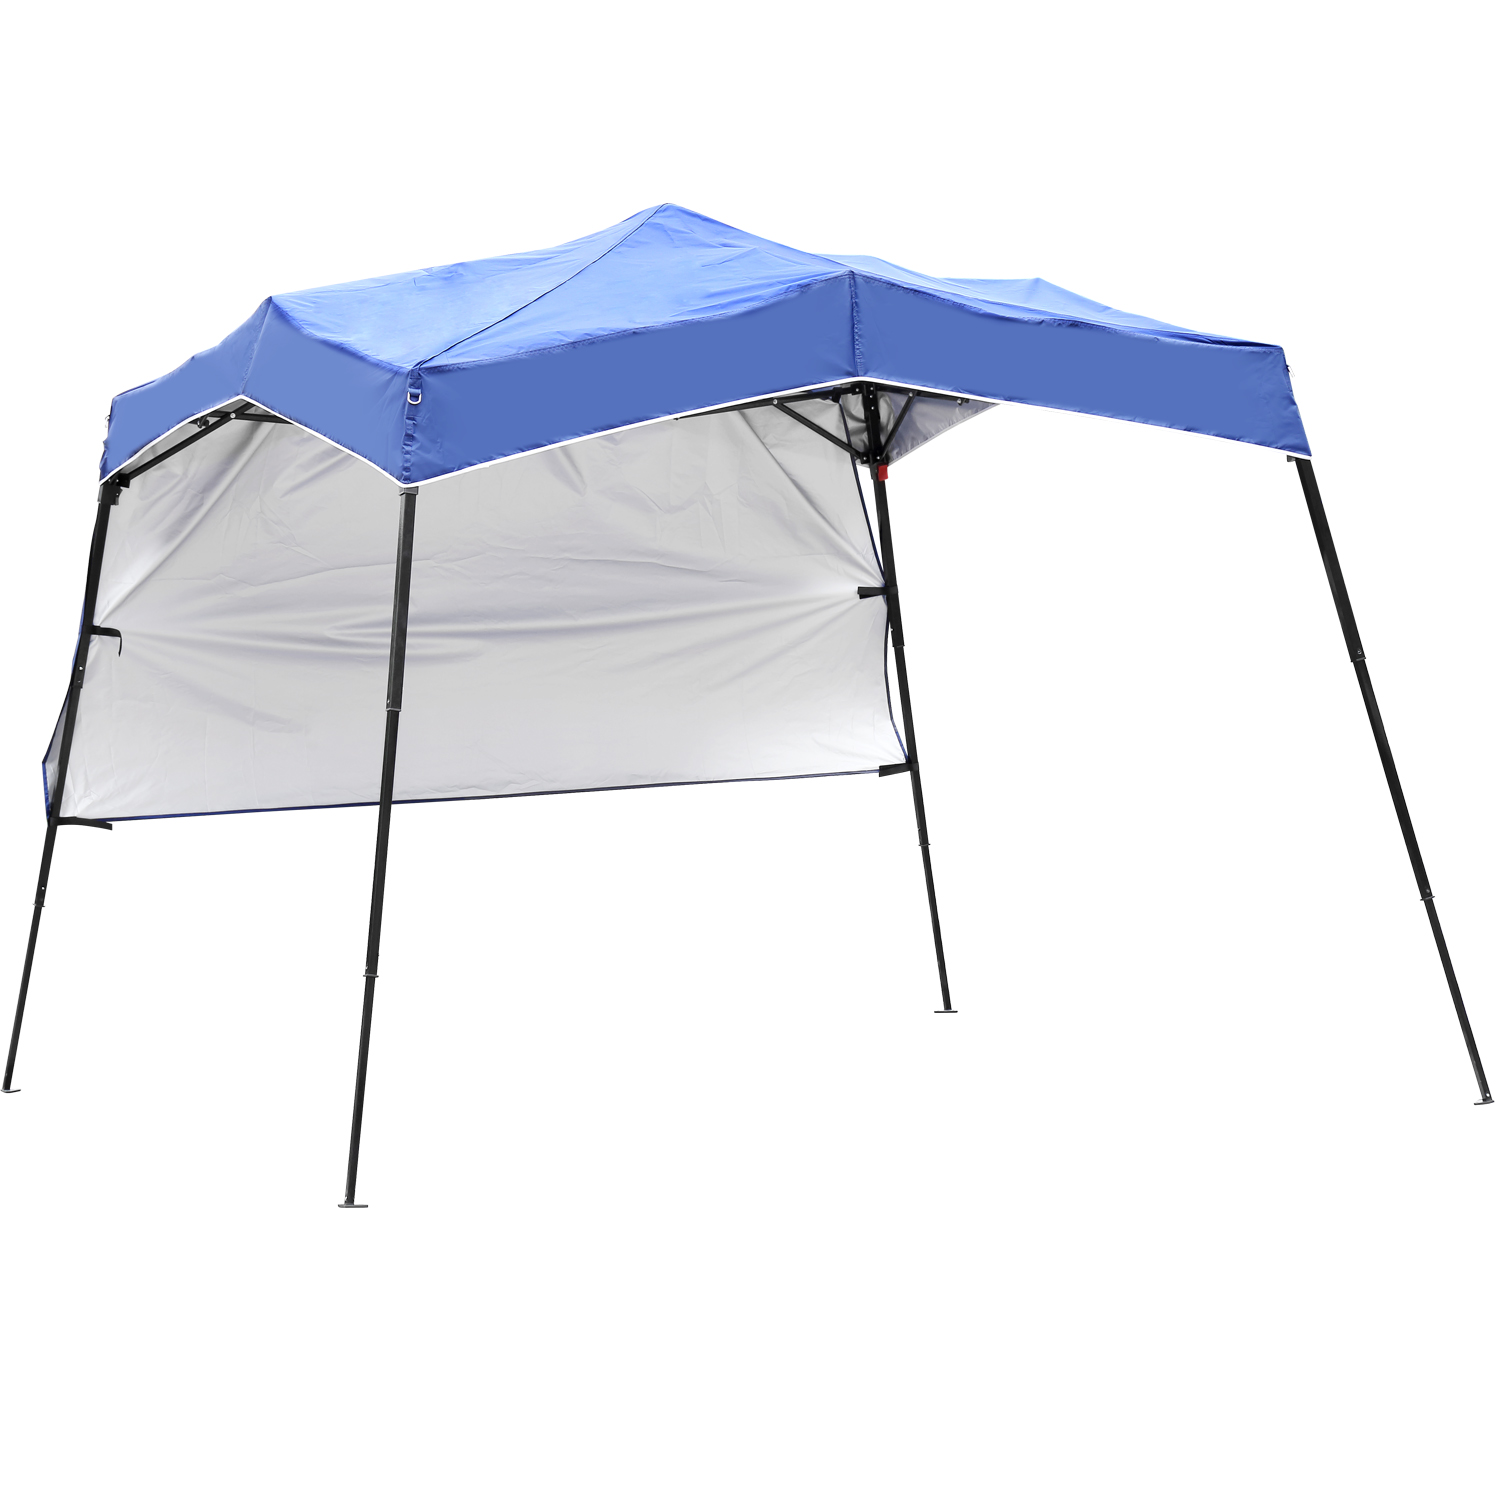 Ainfox 9' x 9' Slant Leg Pop Up Canopy Tent Blue For $35 + Free Shipping